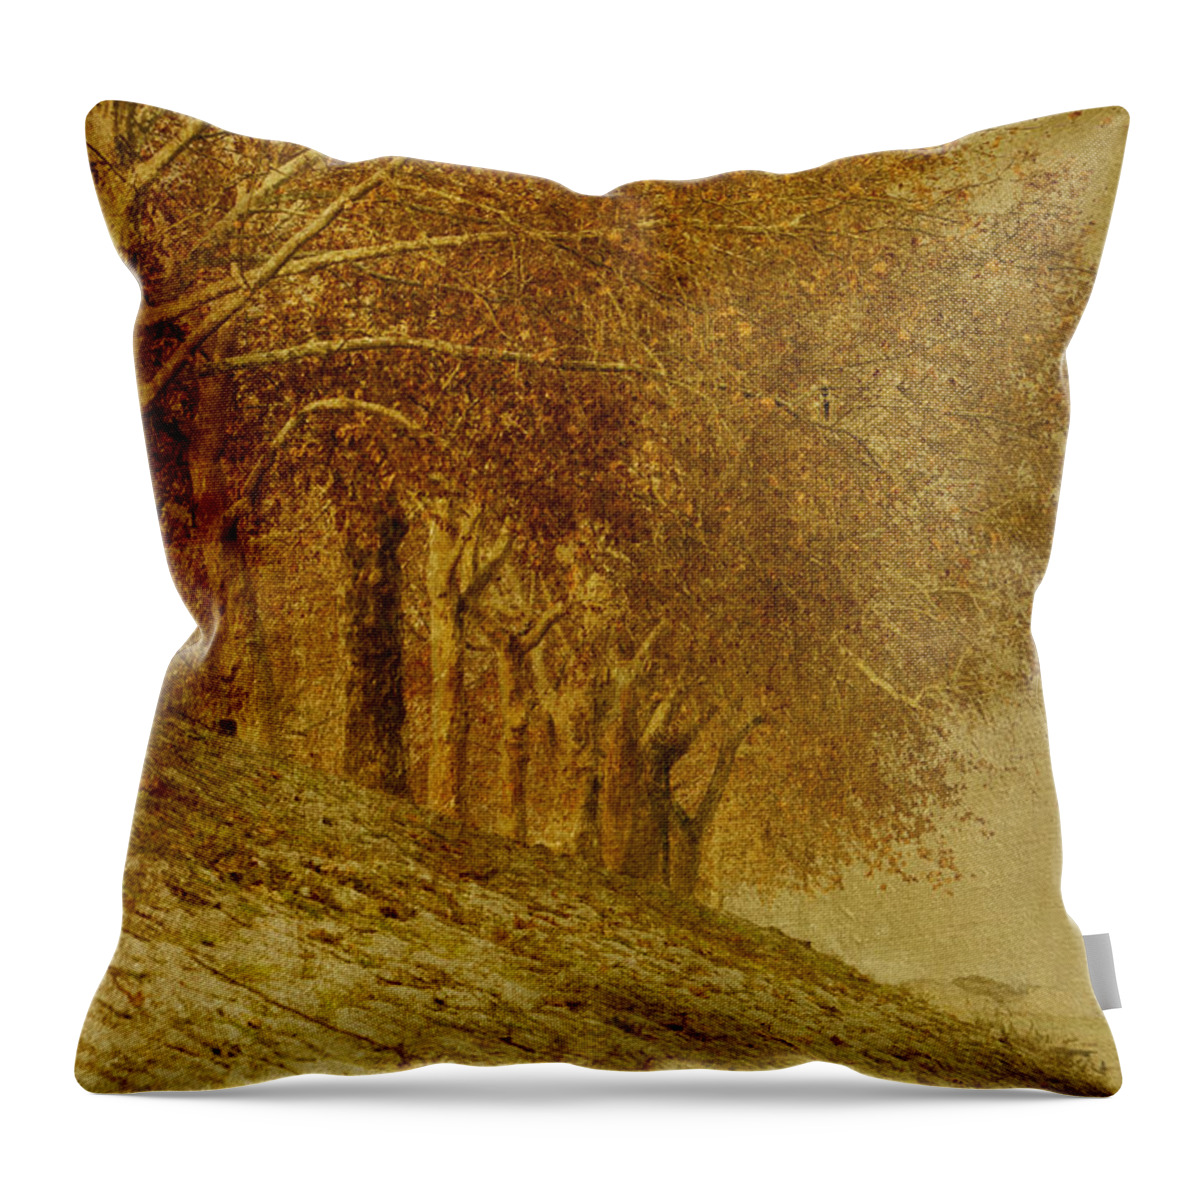 Landscape Throw Pillow featuring the digital art Golden Landscape by Jelena Jovanovic